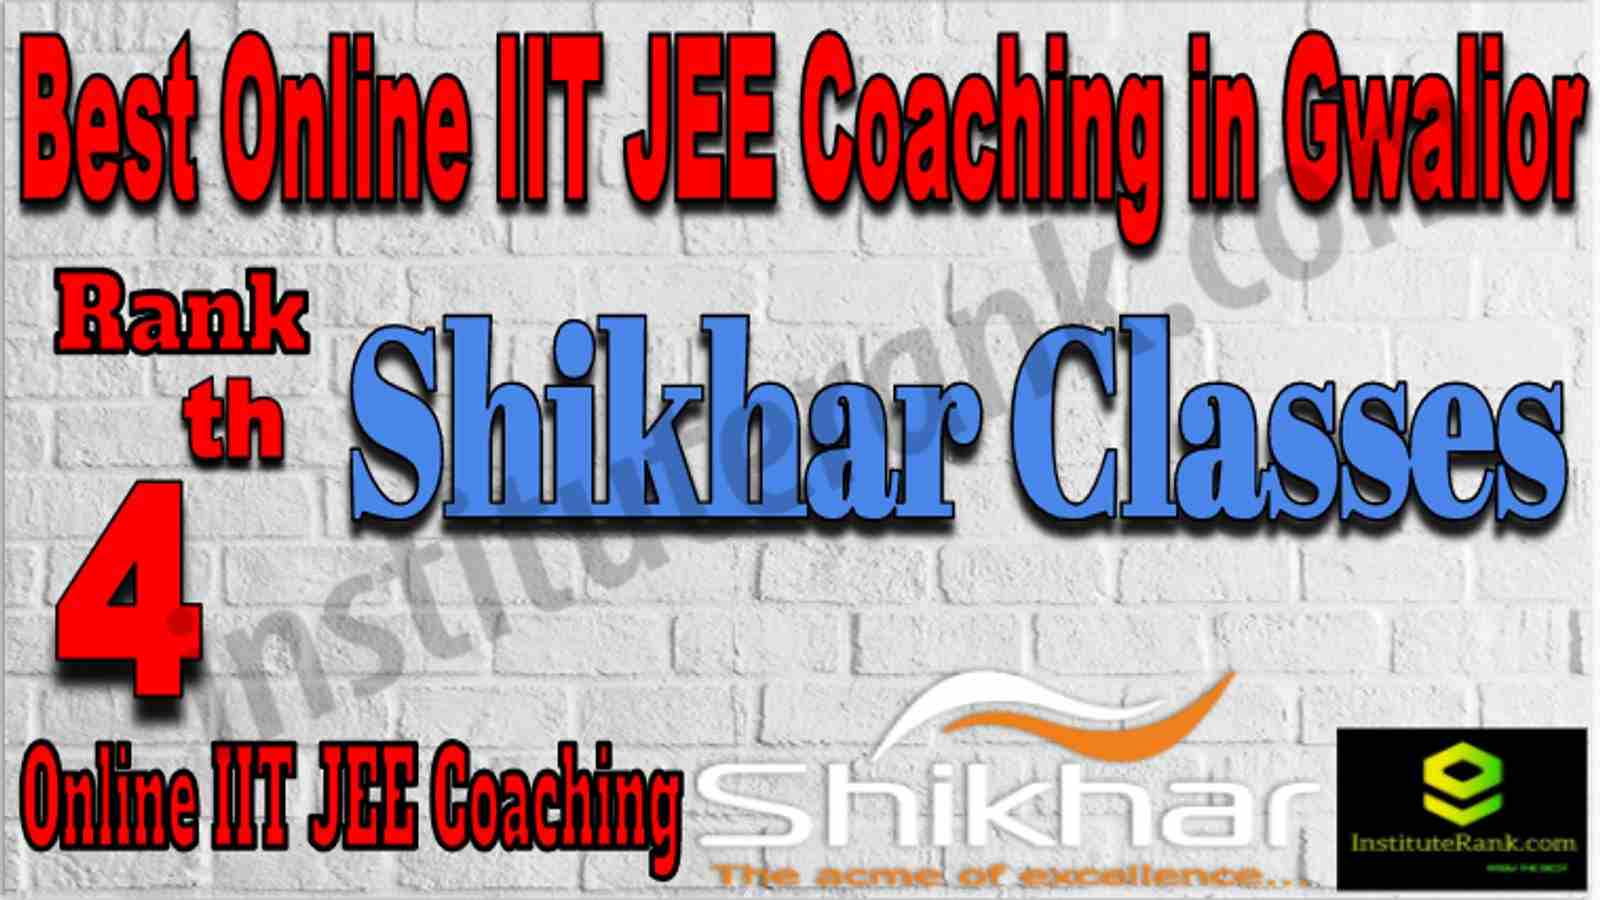 Rank 4 Best Online IIT JEE Coaching in Gwalior